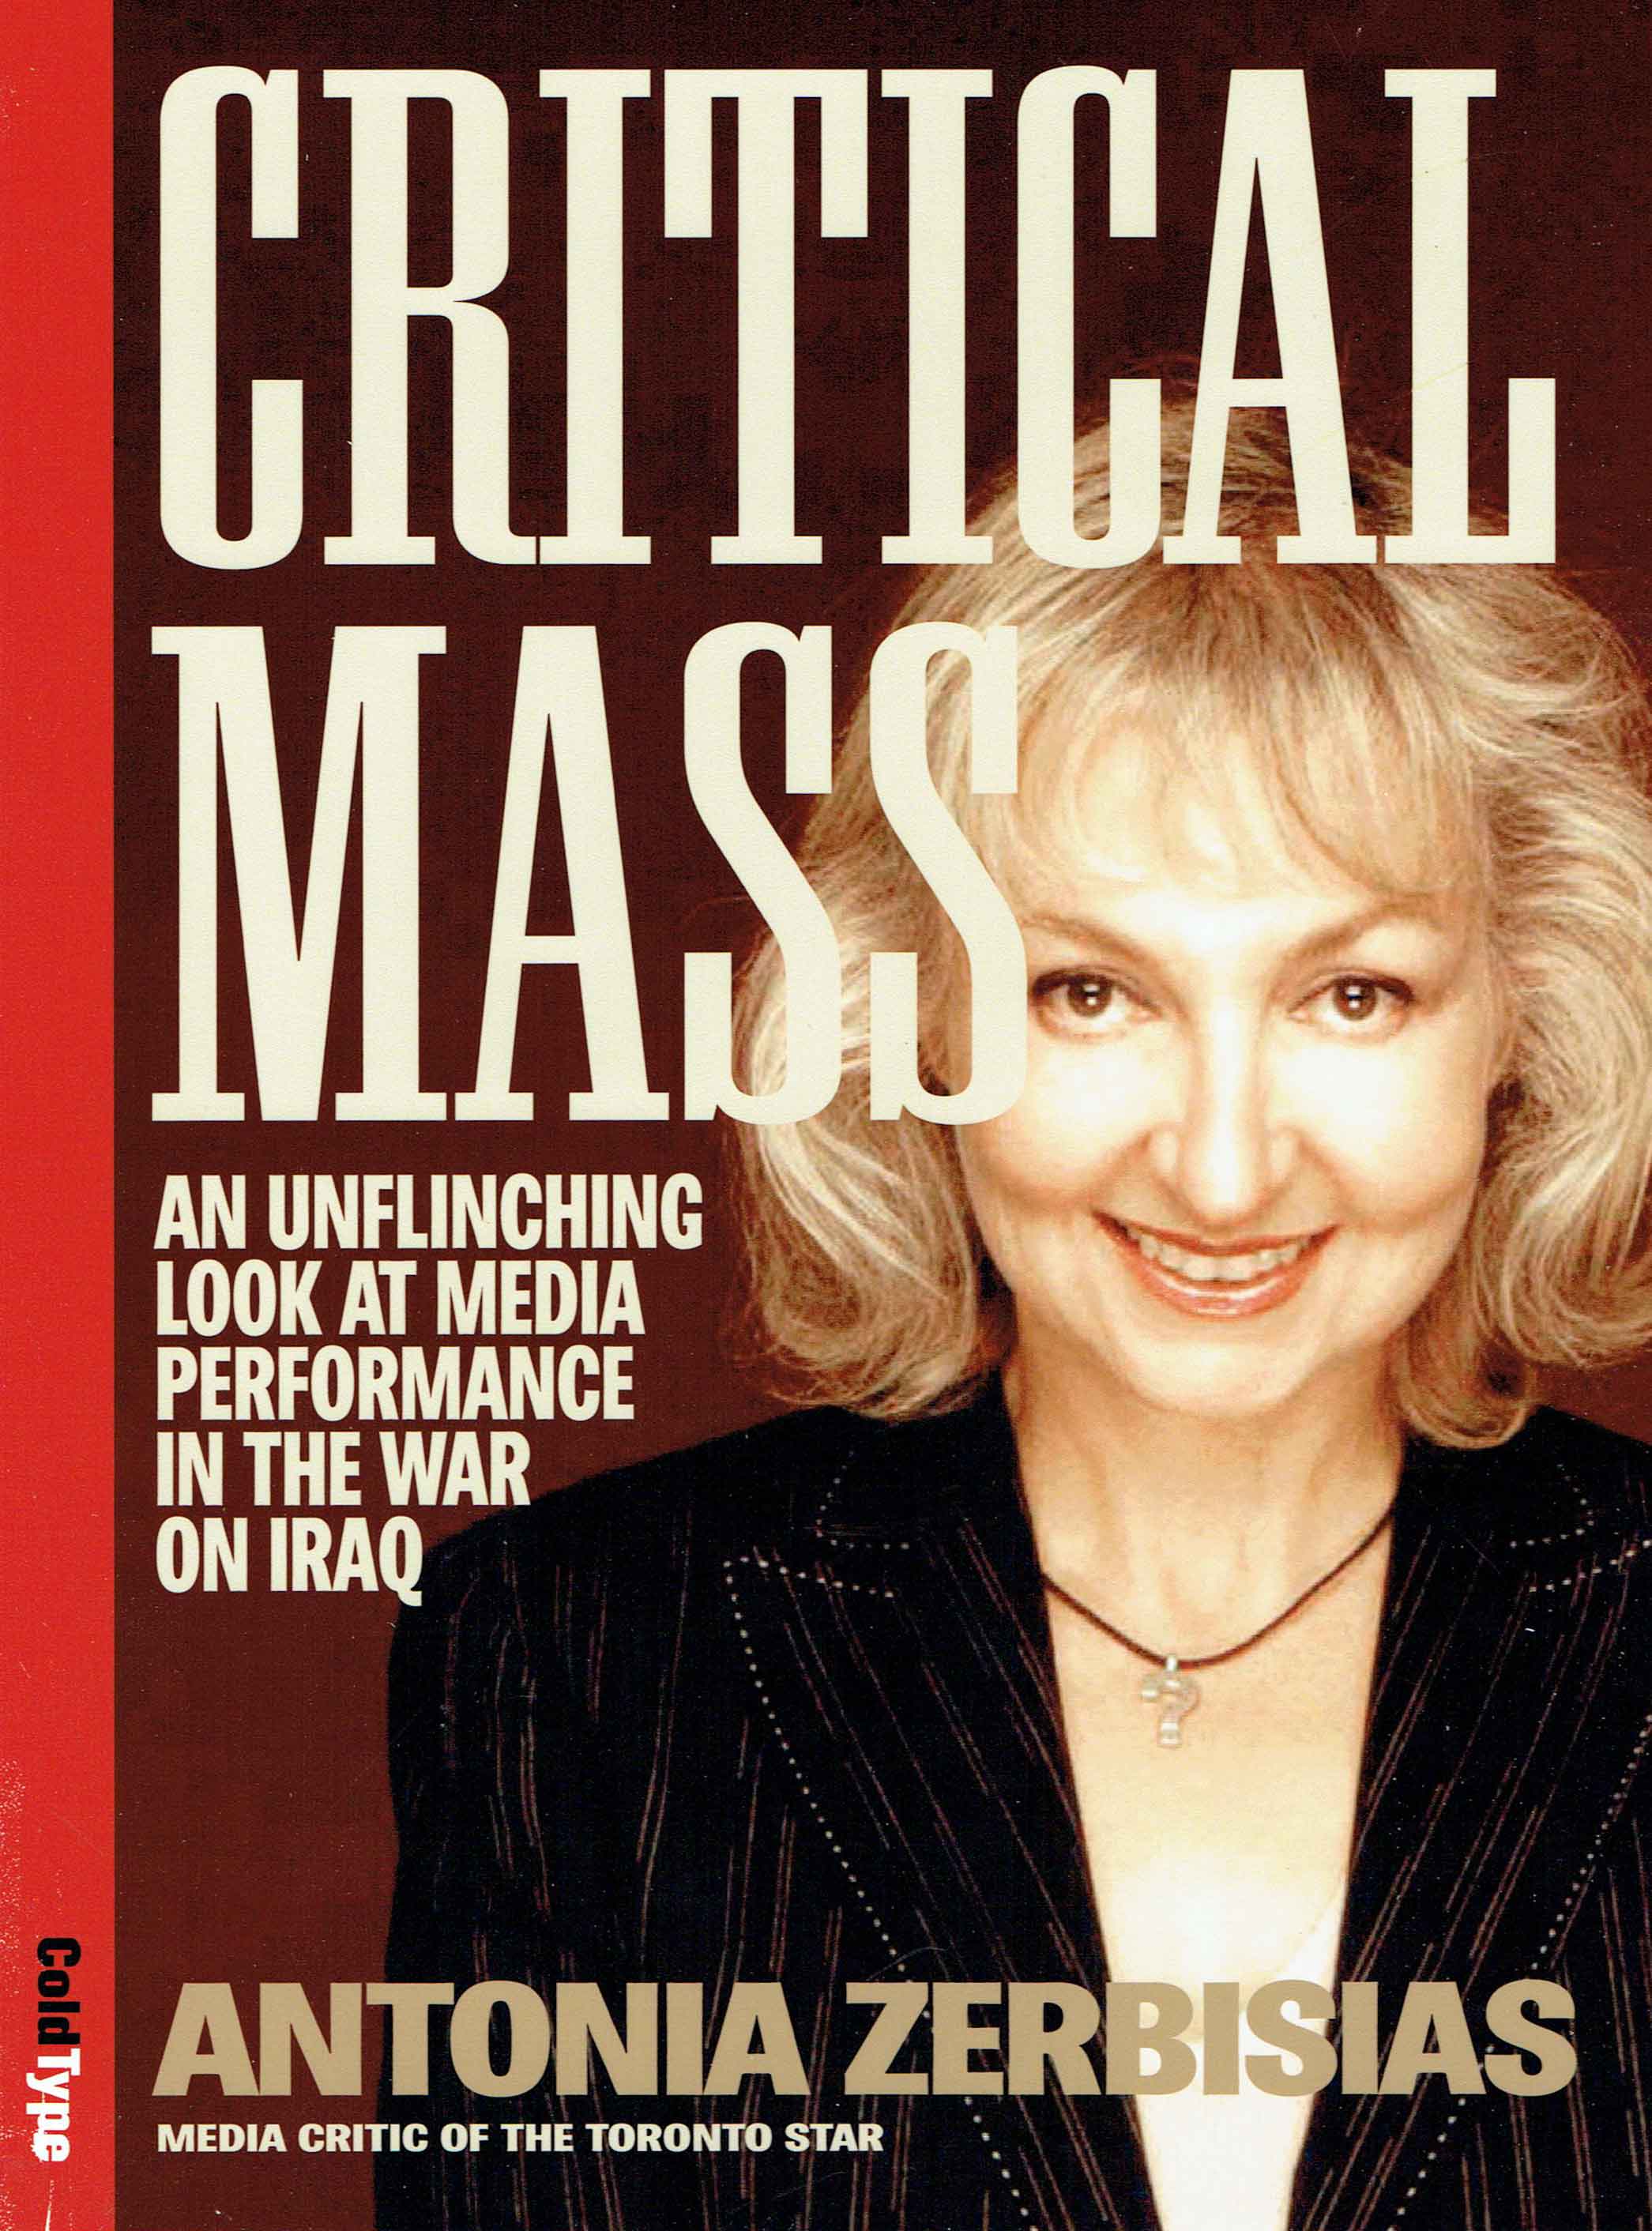 Antonia on cover of Critical Mass magazine